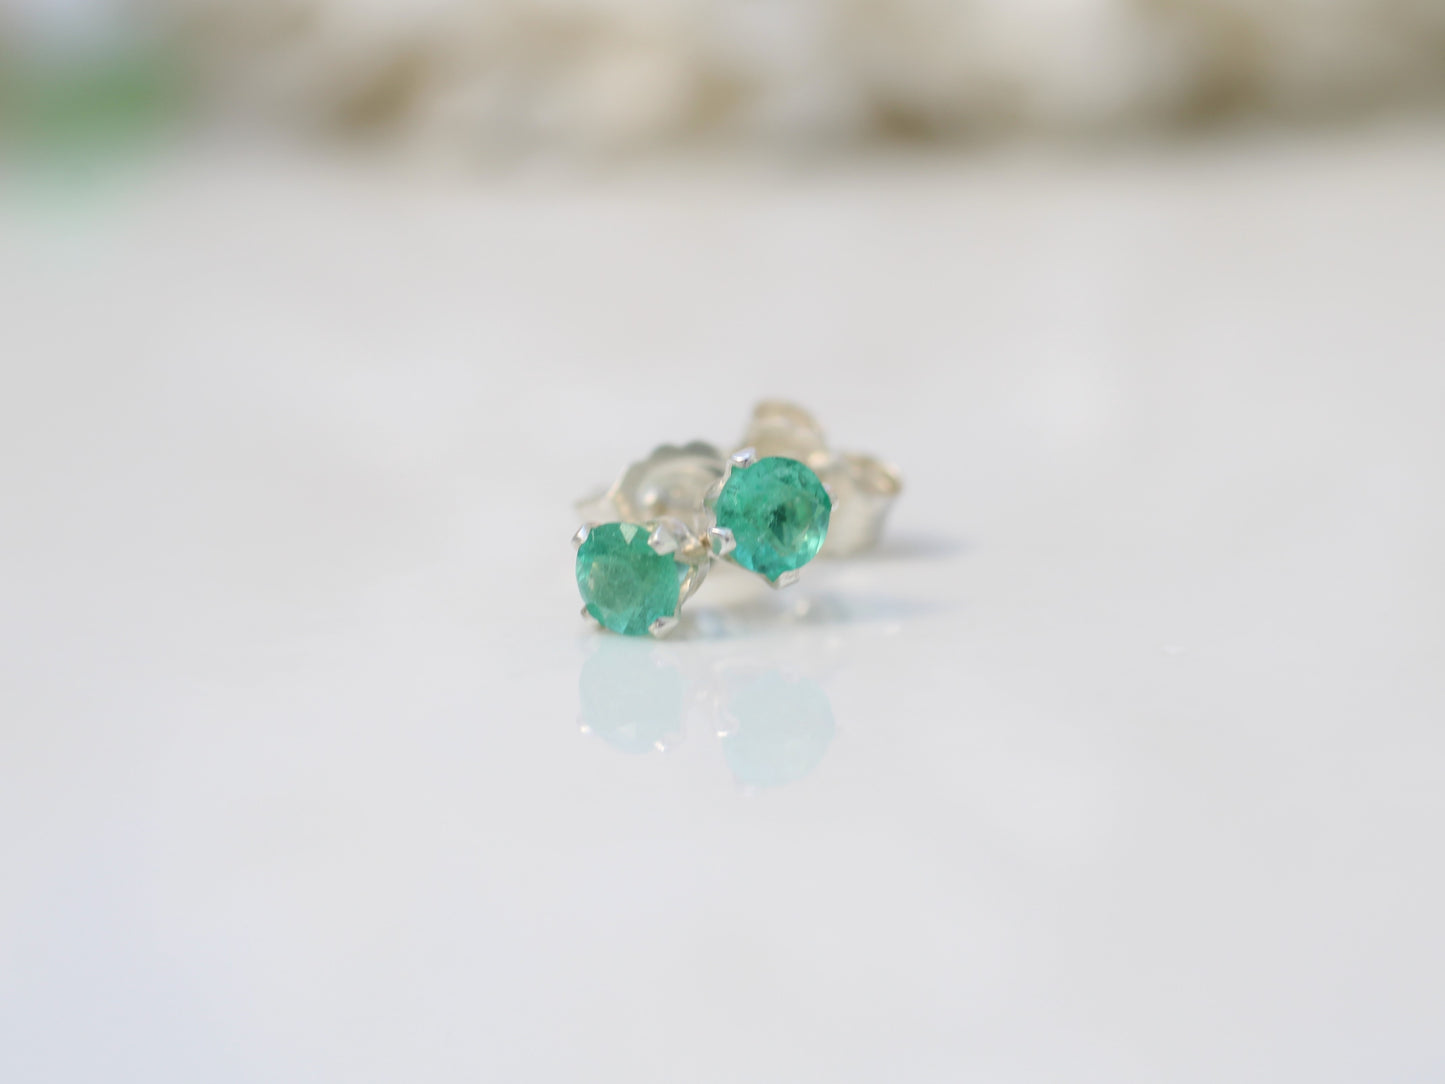 Genuine emerald stud earrings in silver or gold.